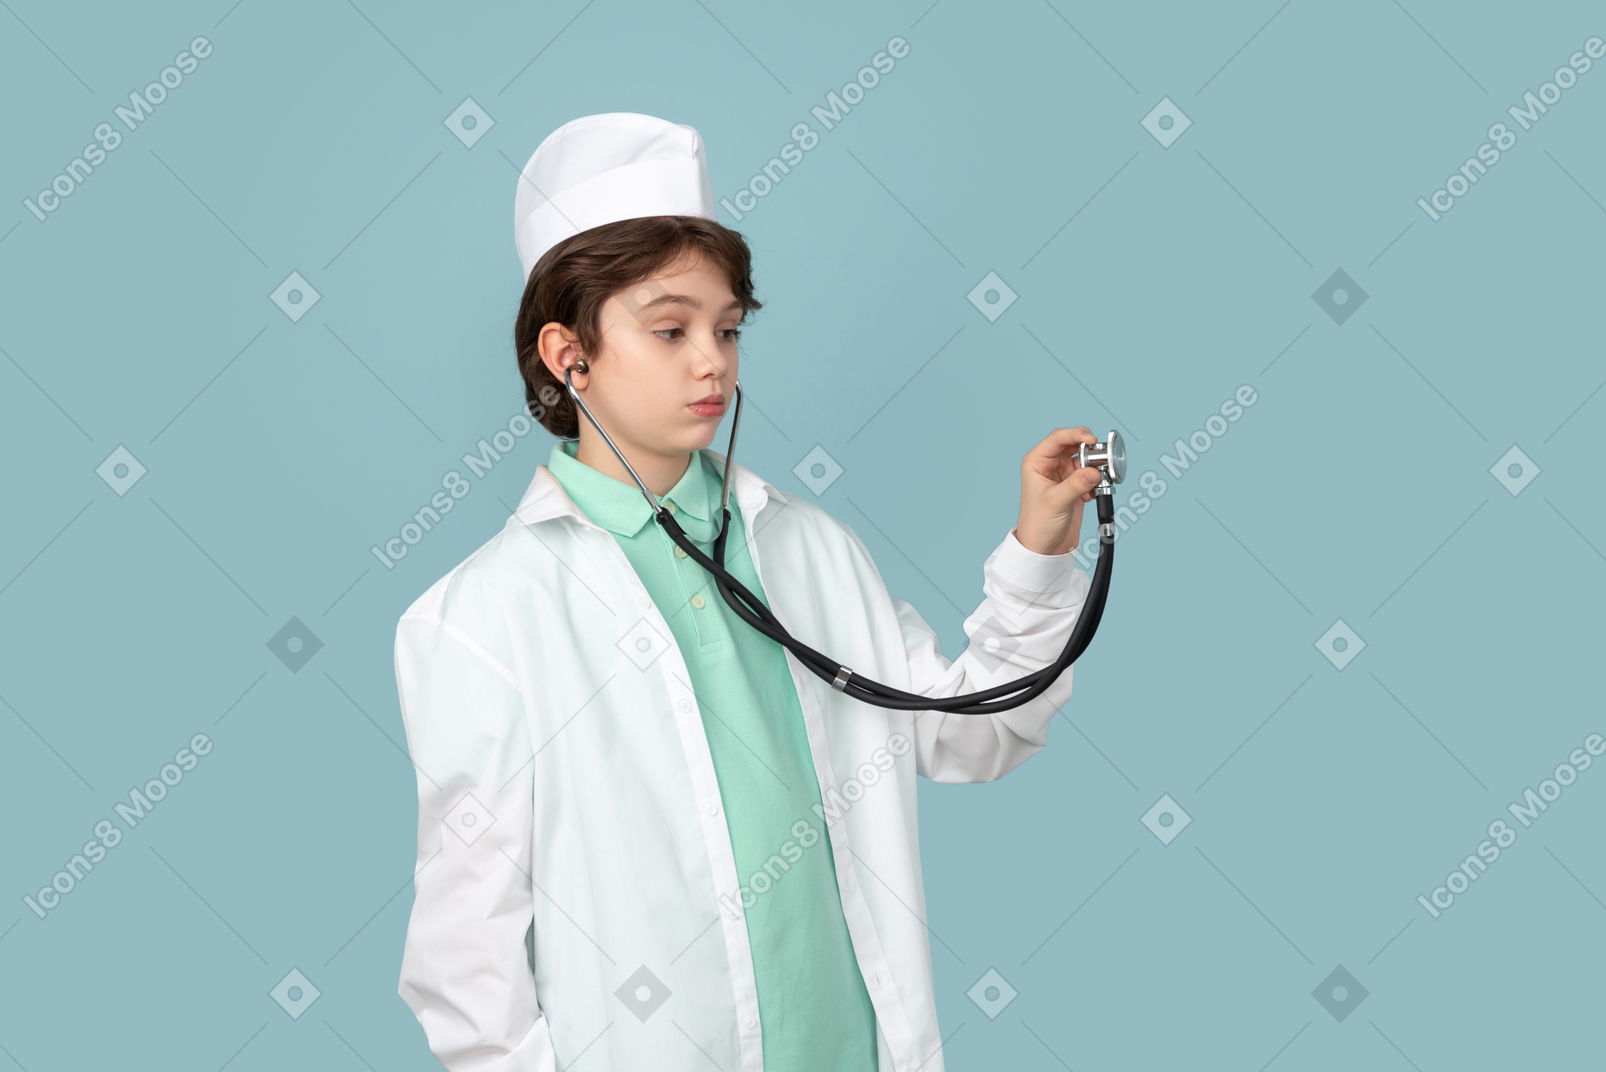 Adolescent attrayant dans la tenue d'un docteur